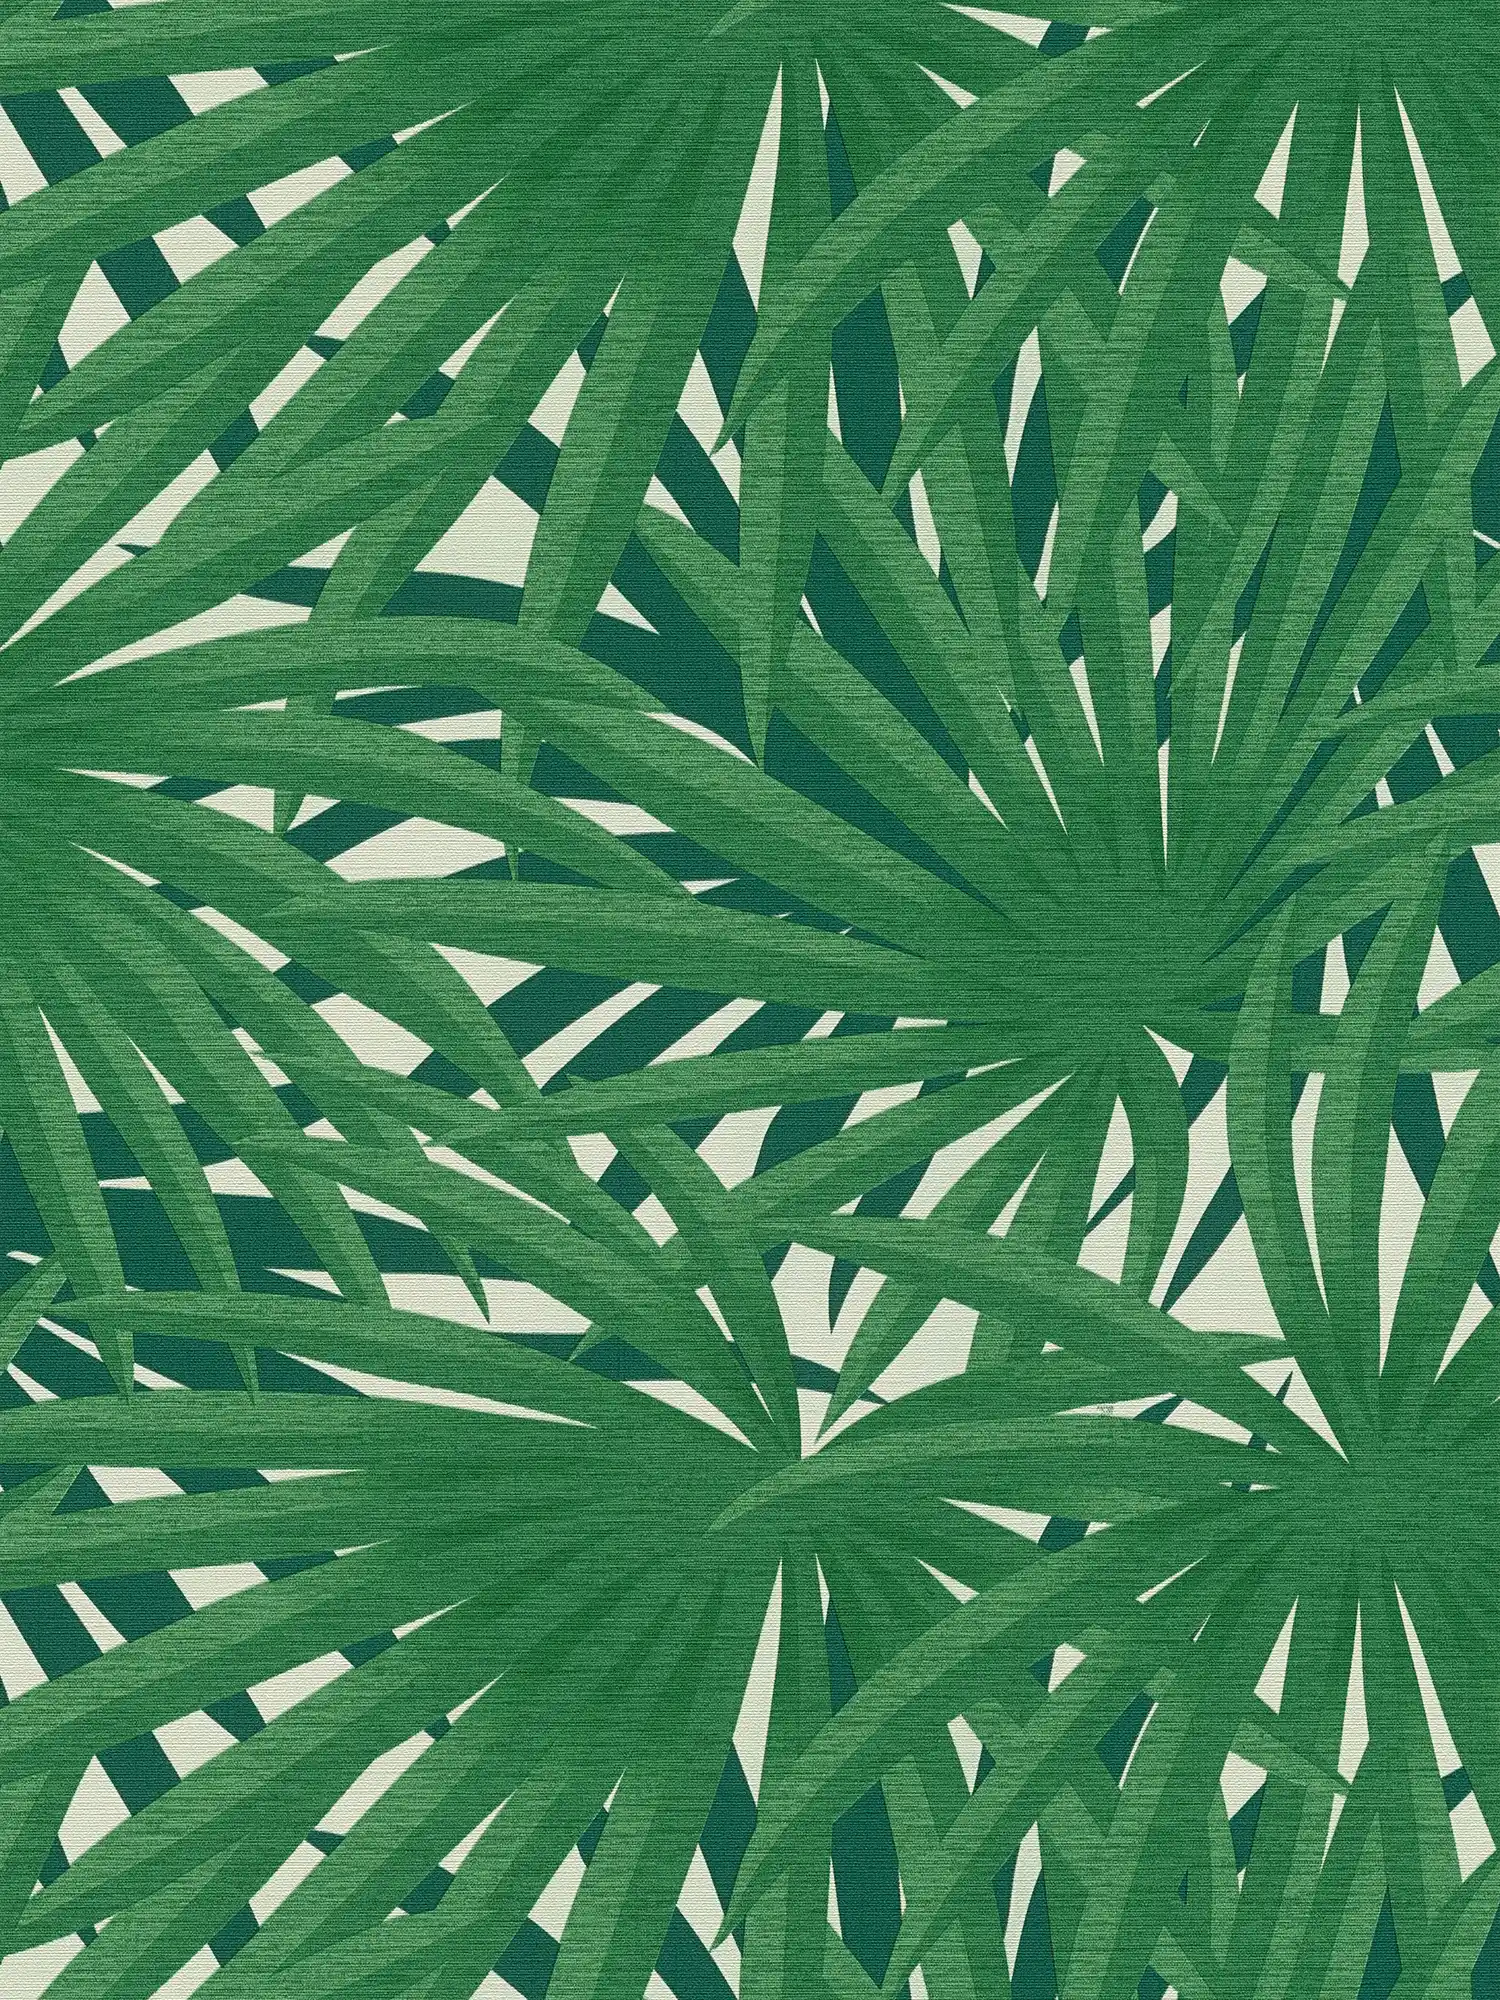 Tropical wallpaper with jungle design & metallic luster - green, metallic, white
